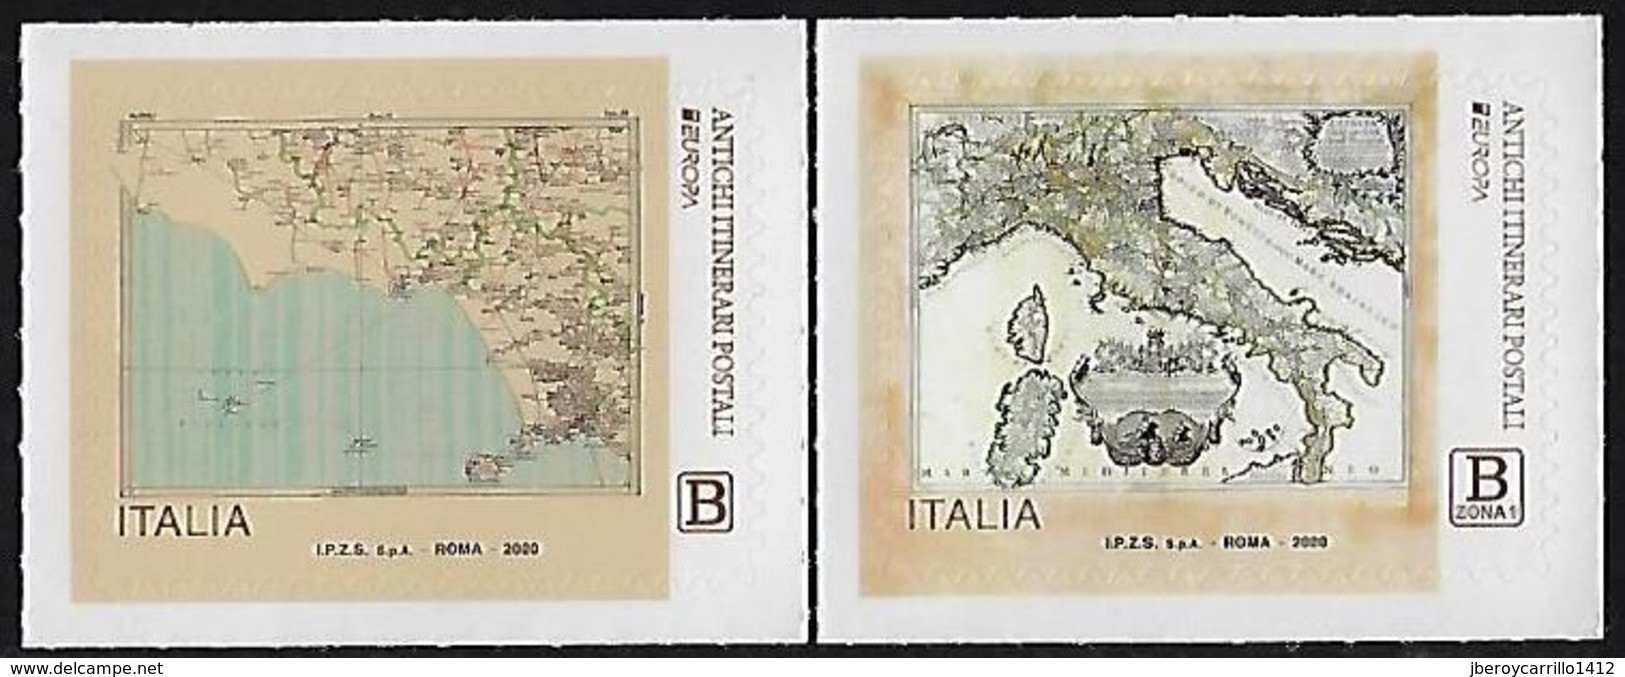 ITALIA /ITALY / ITALIEN - EUROPA 2020 - "ANTIGUAS RUTAS POSTALES - ANCIENT POSTAL ROUTES" - SERIE De 2 V. - N - 2020